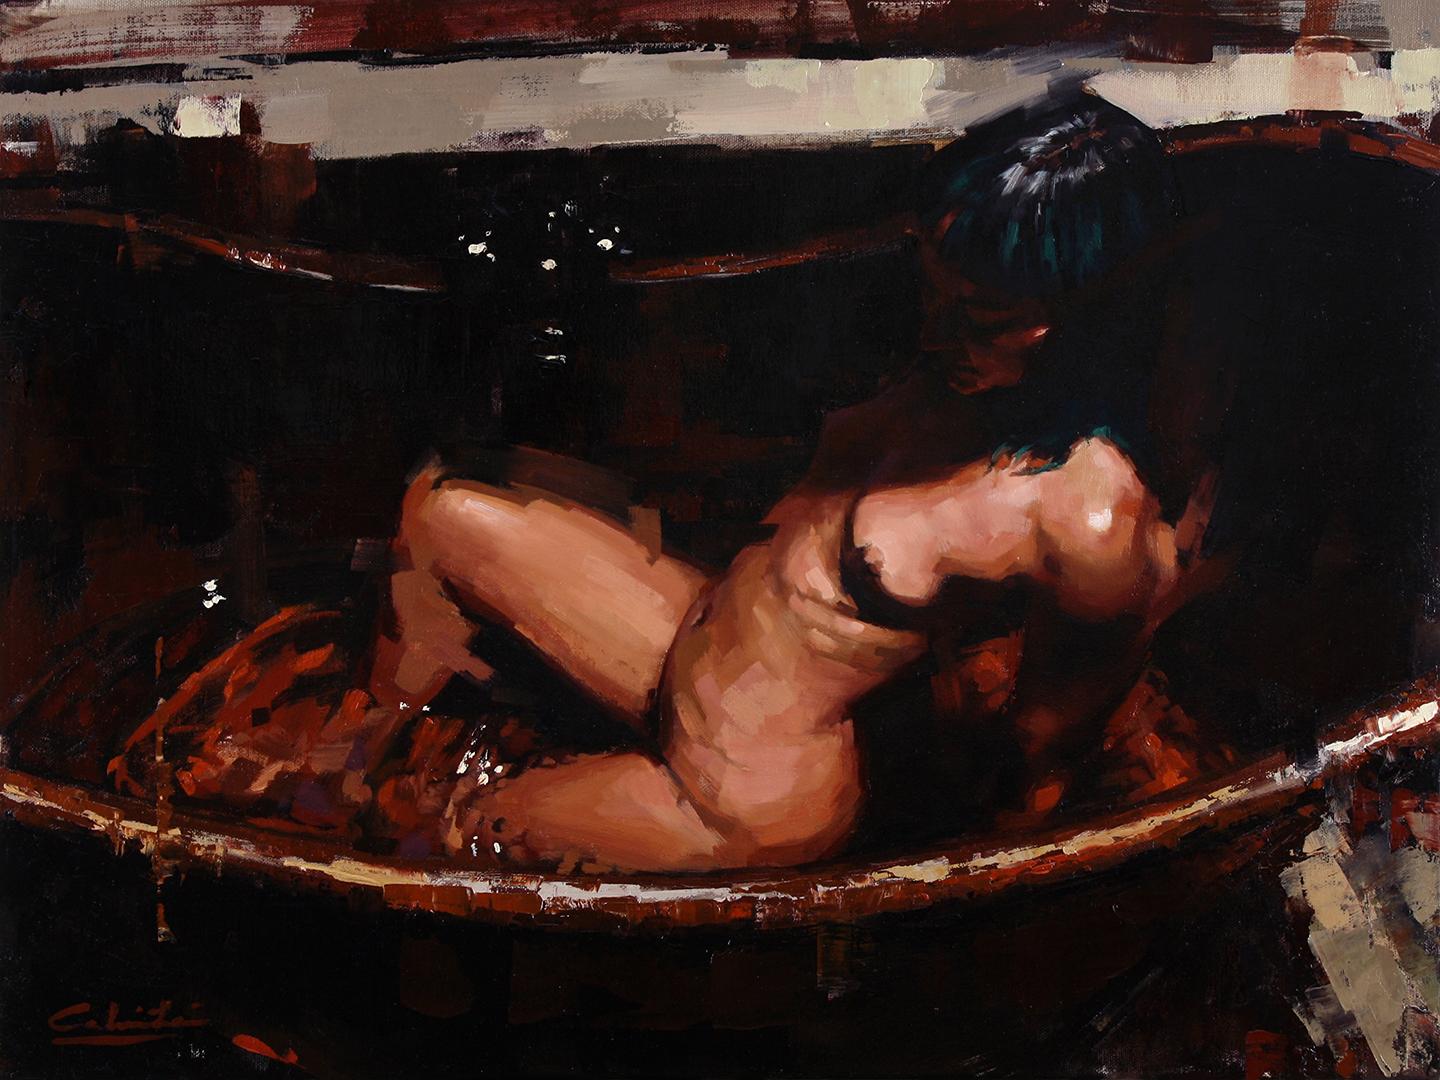 Copper - Bath nude portraiture artwork realism oil painting modern human form